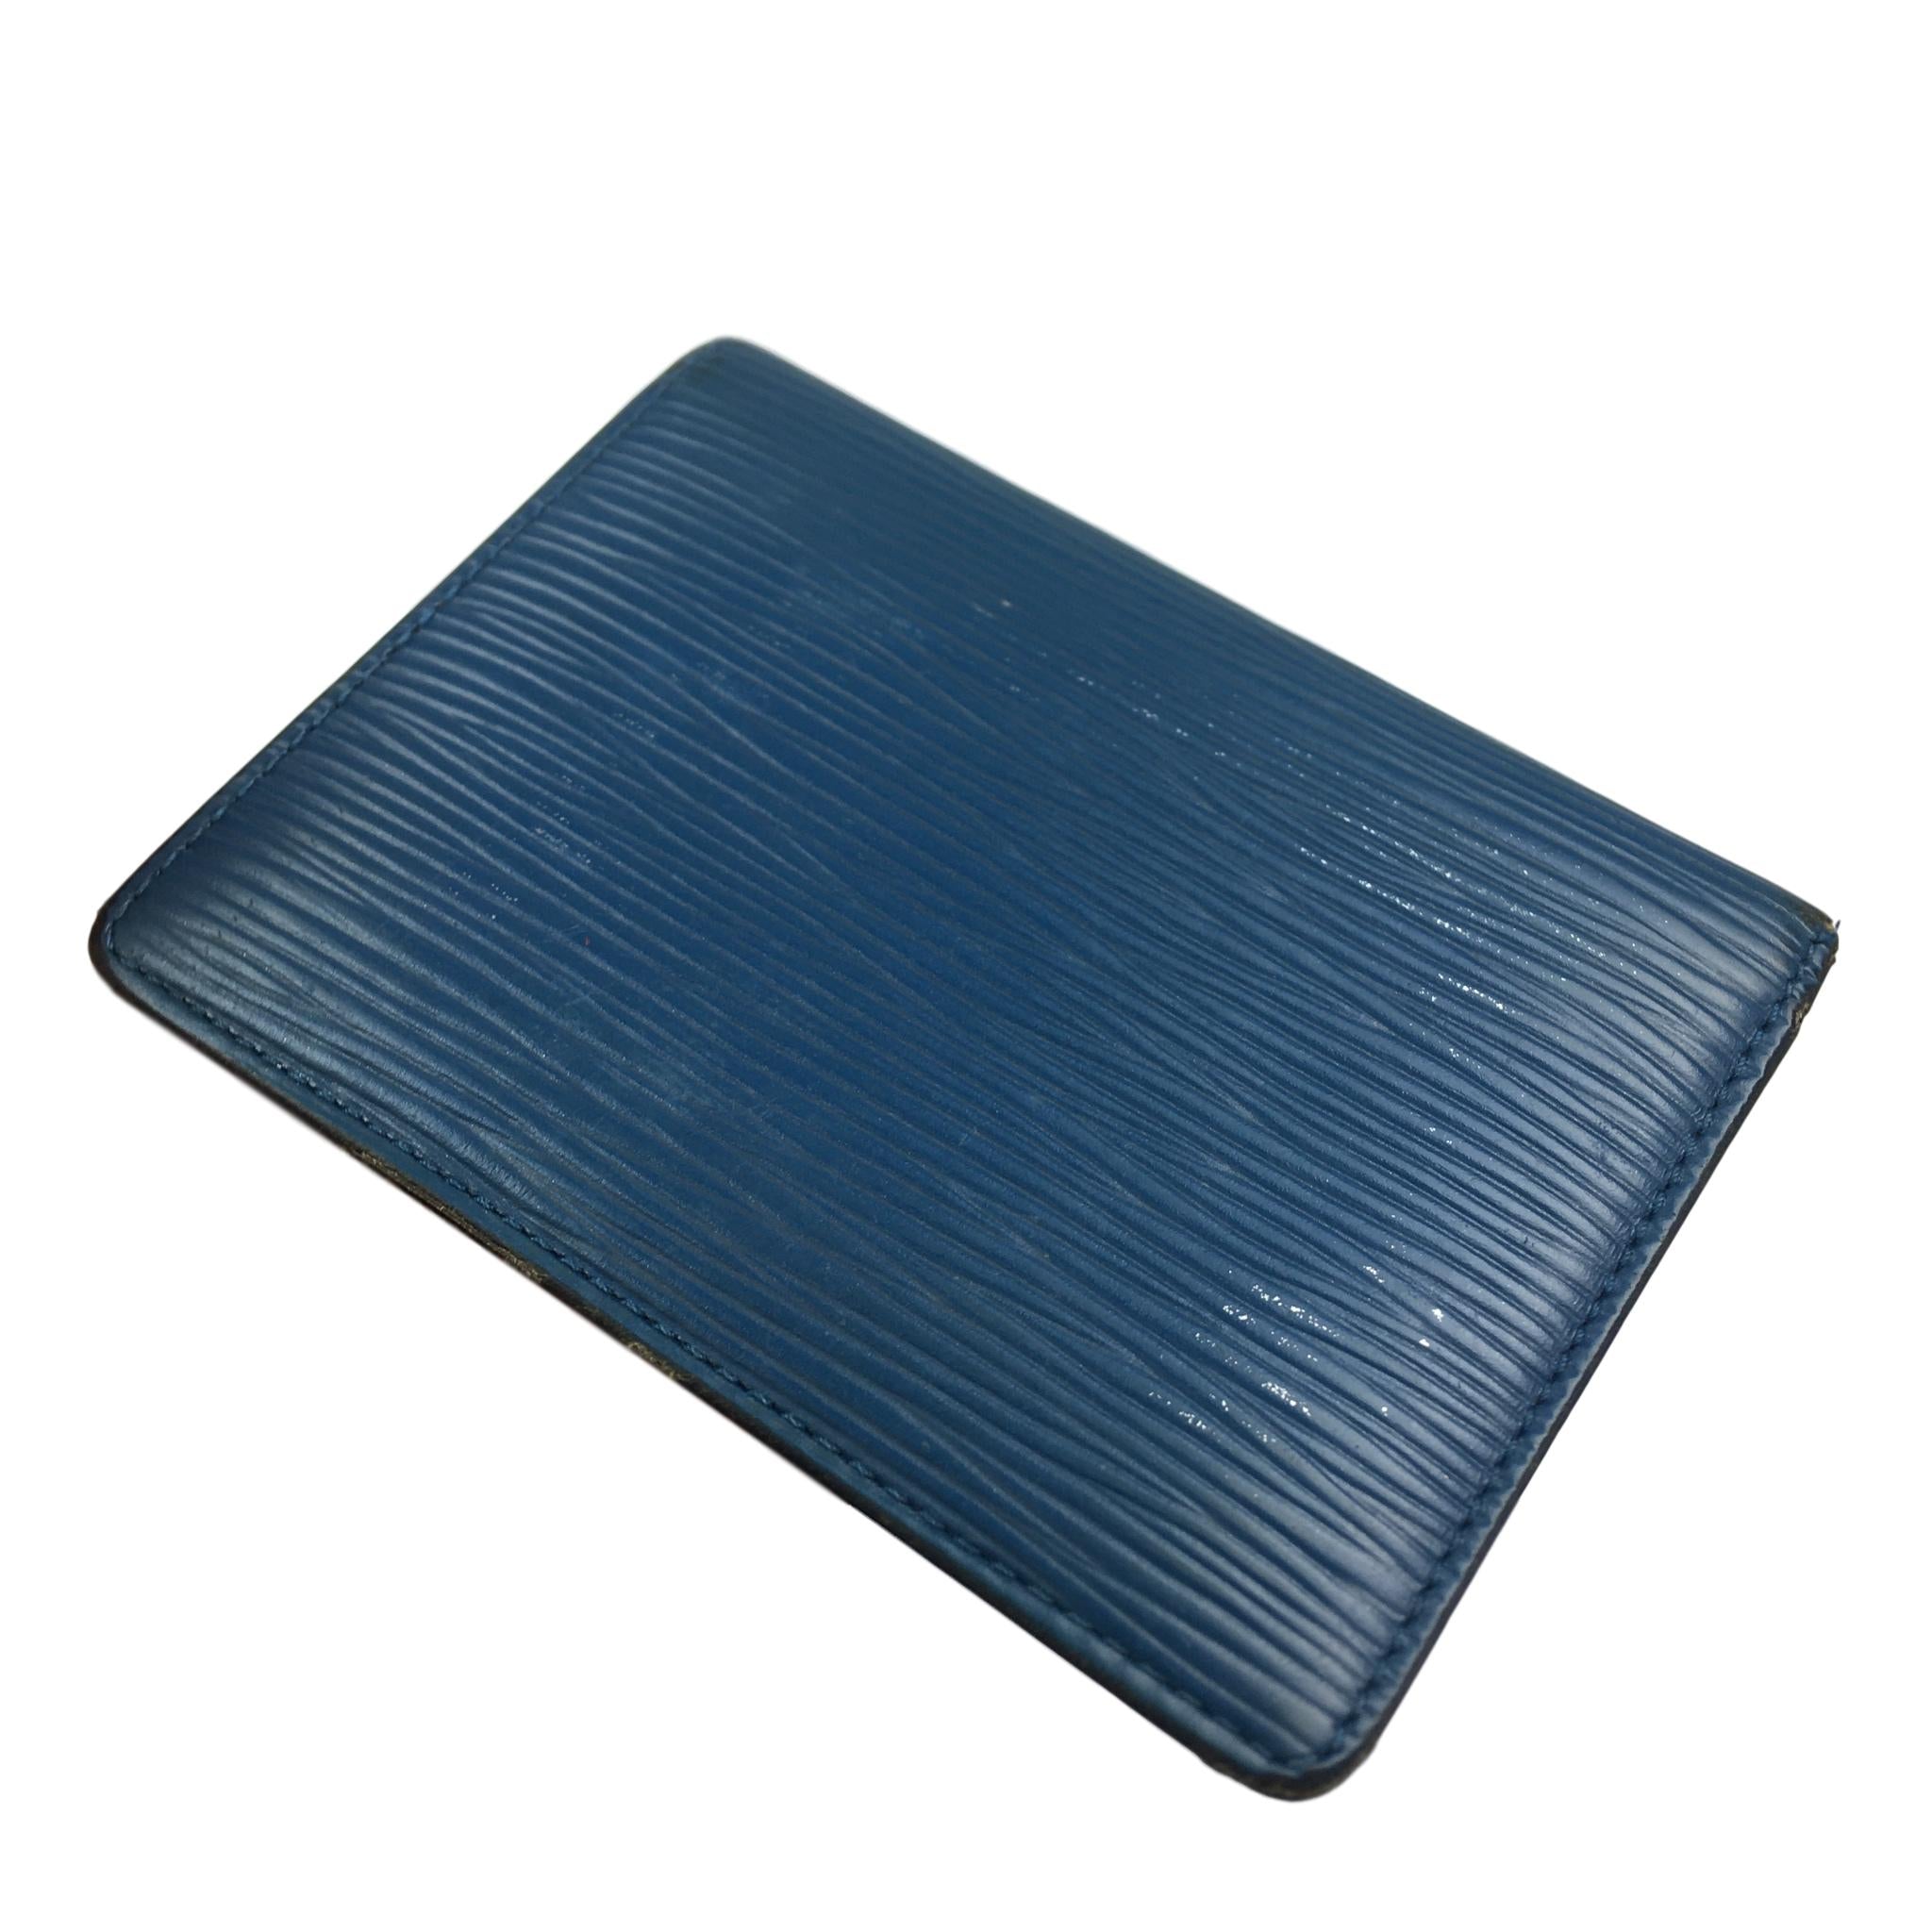 🔴 Louis Vuitton MALLETIER Card Holder Wallet - Blue Epi – PROVENANCE